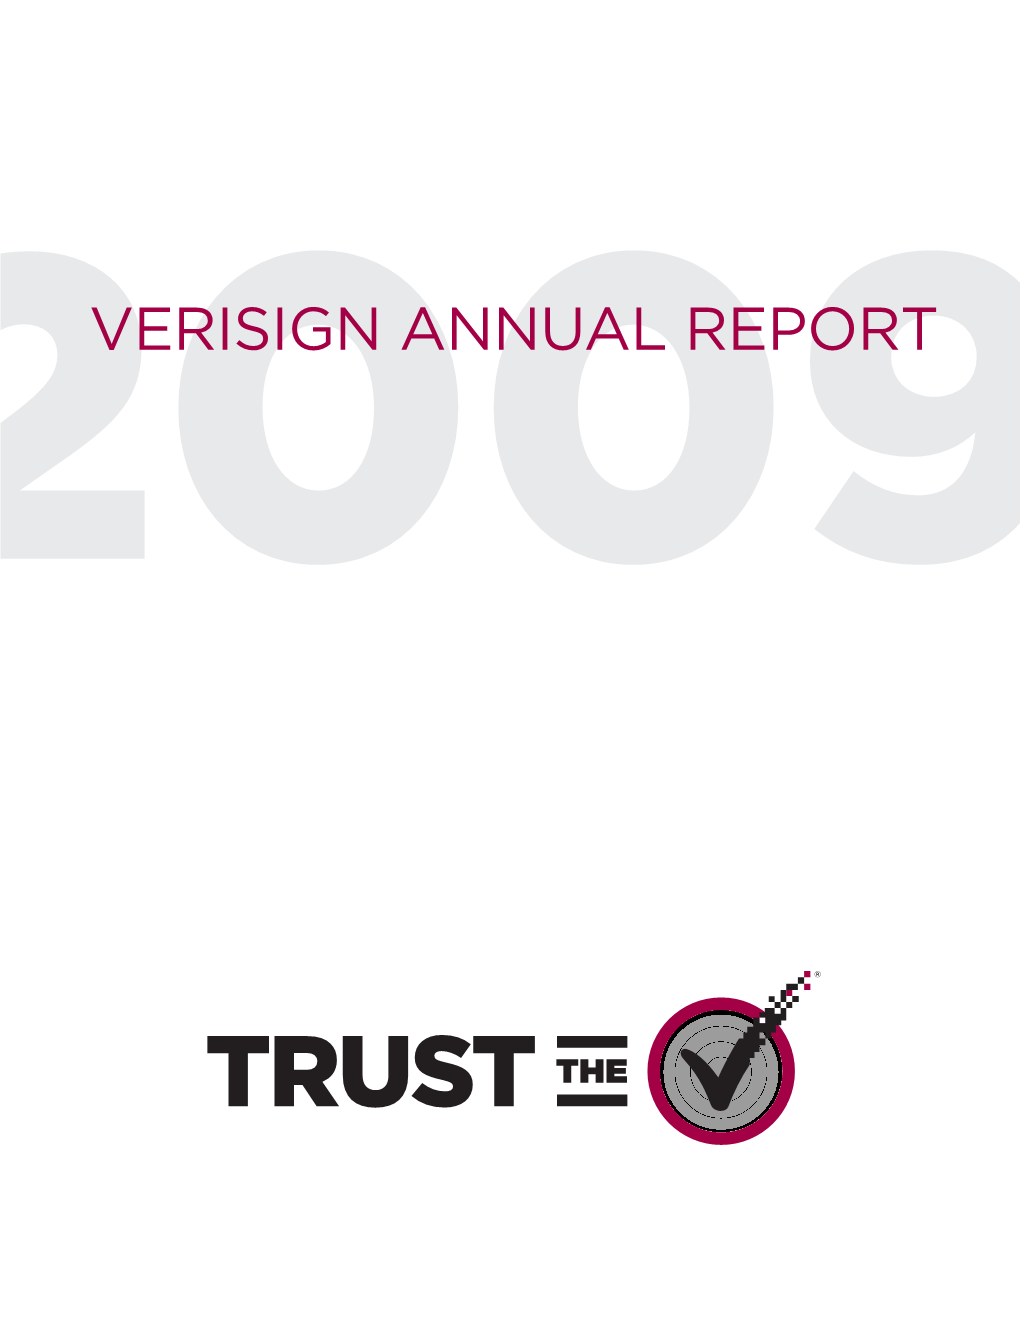 Verisign Annual Report